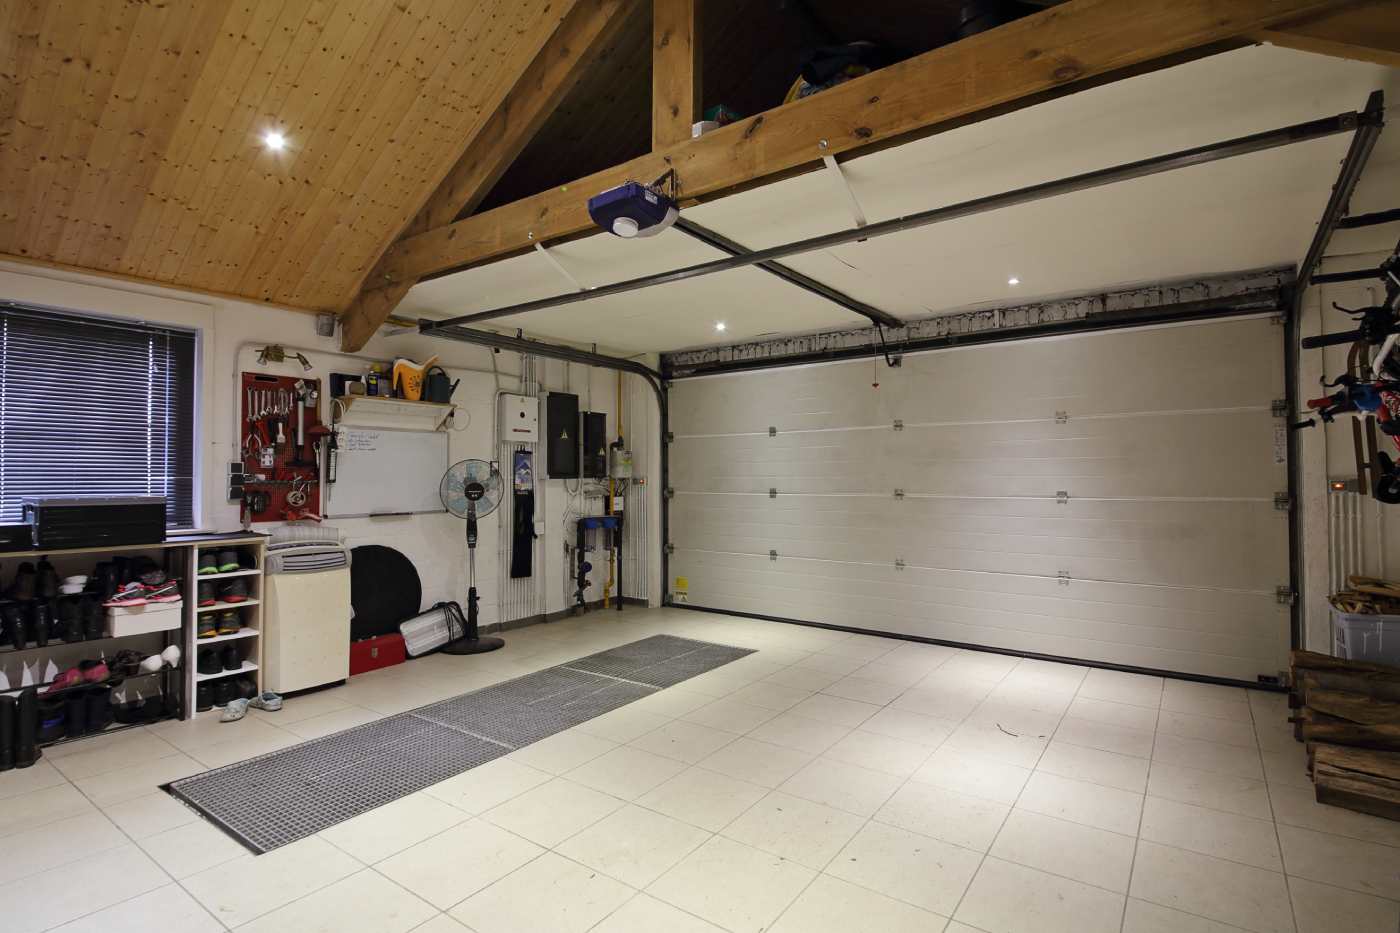 Organized and clean garage